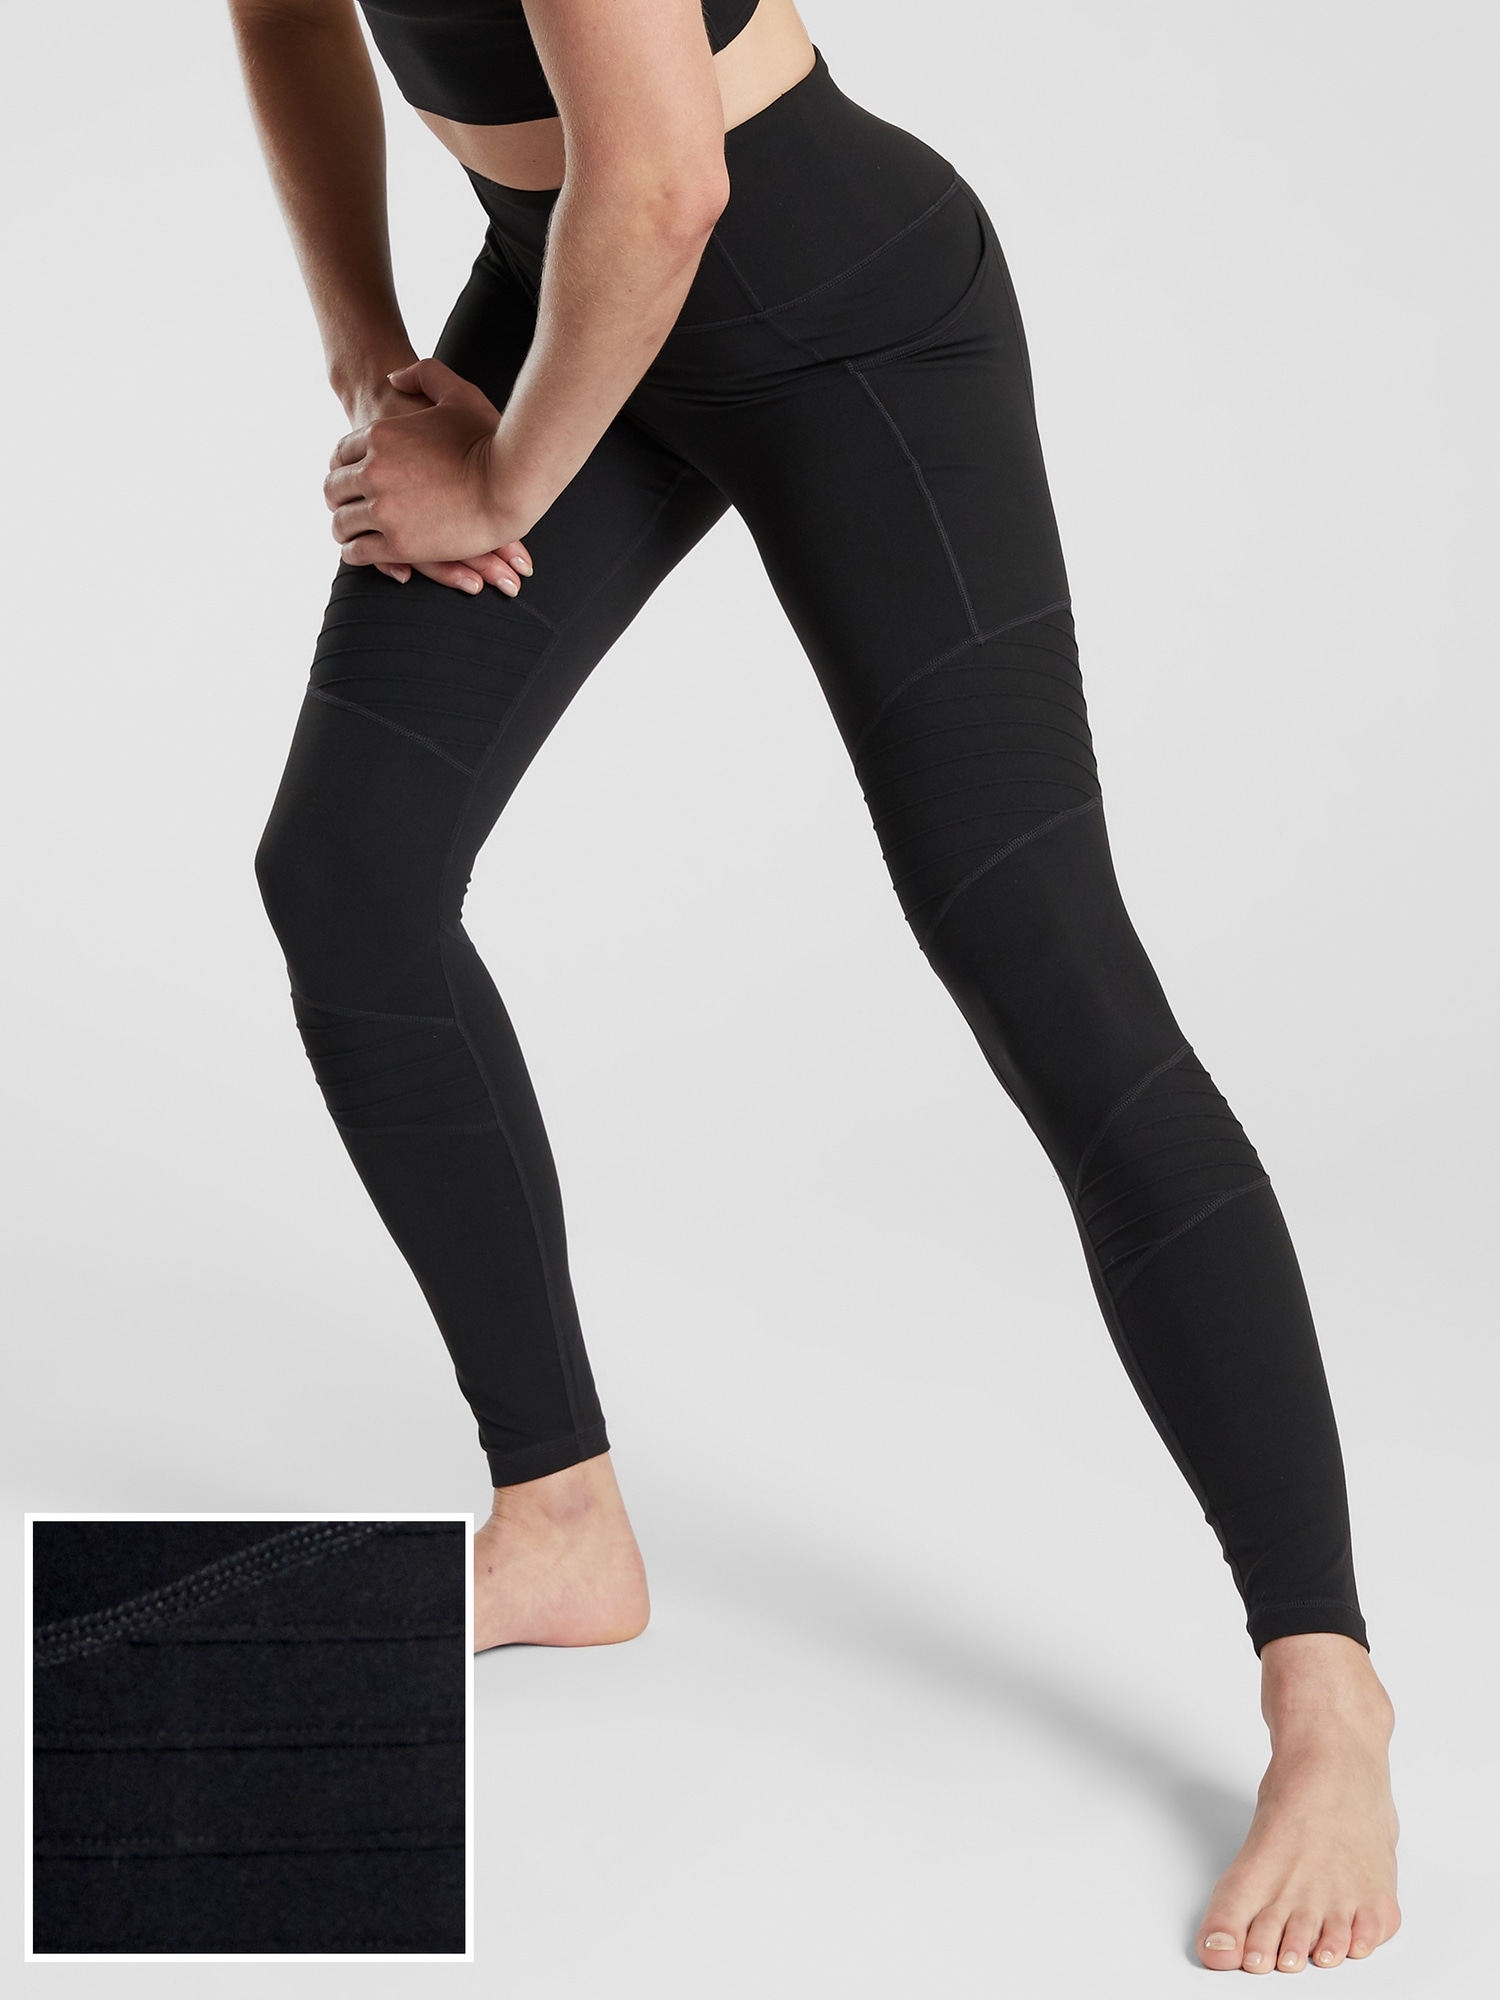 athleta yoga pants